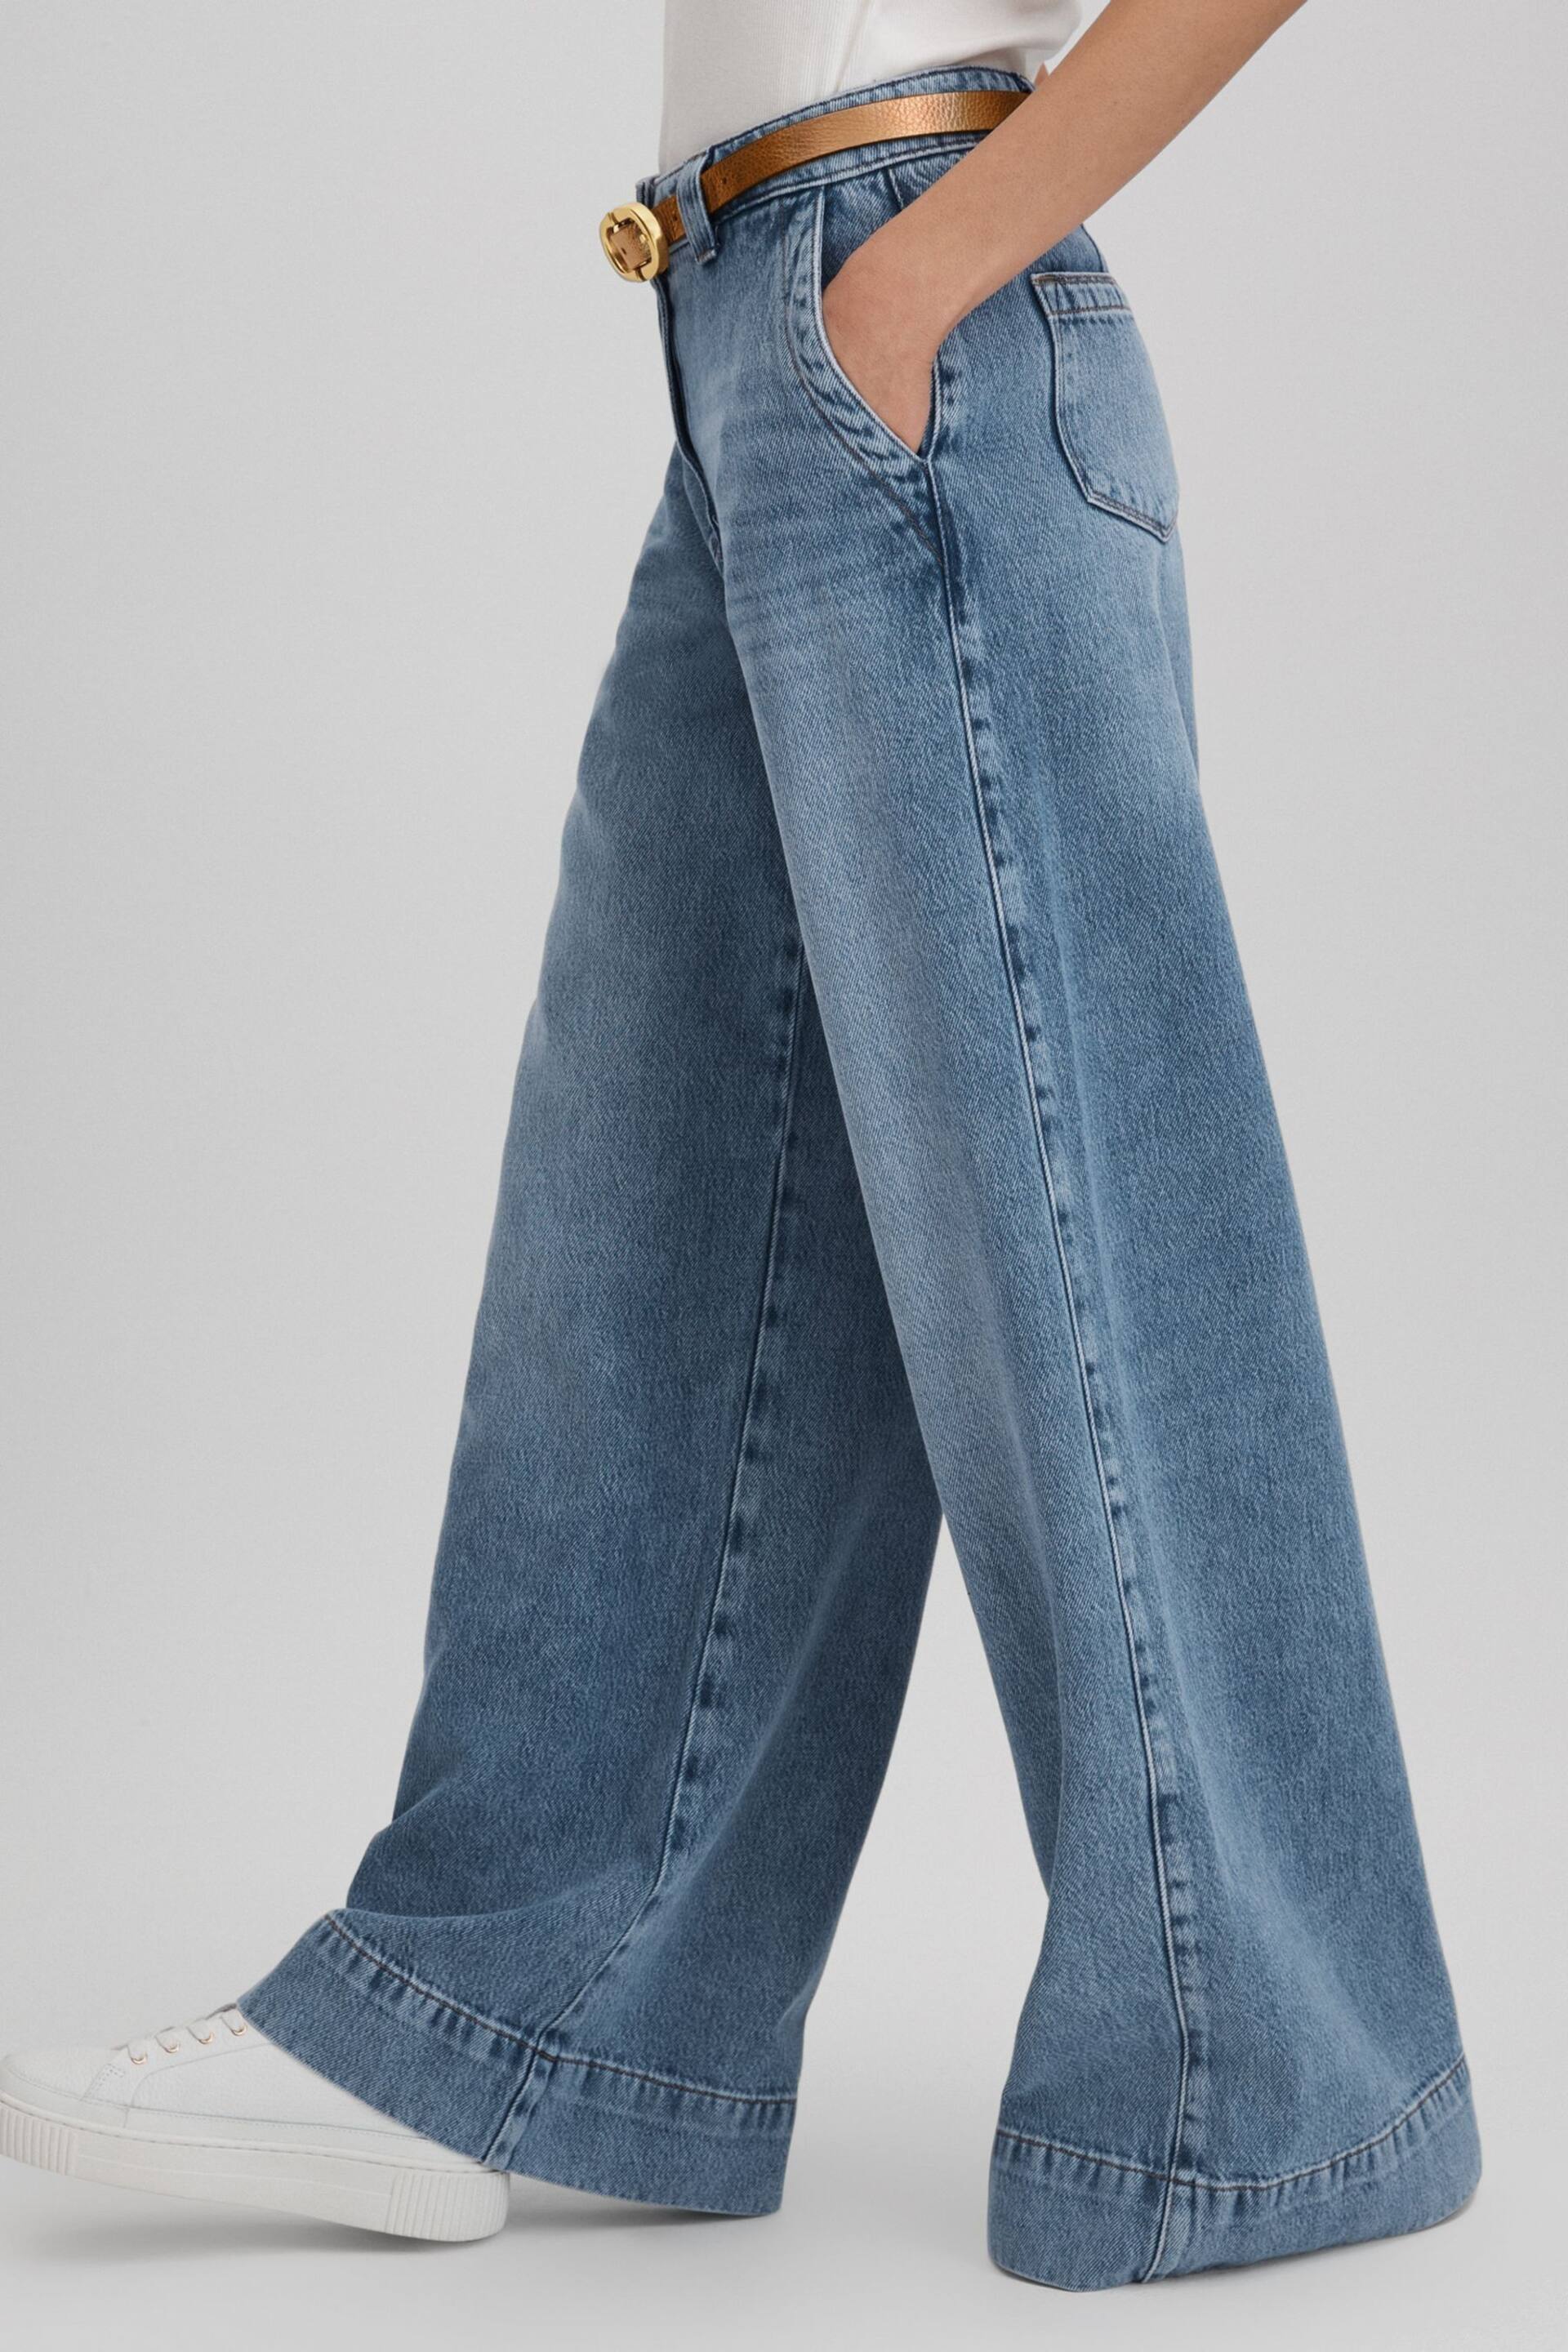 Reiss Light Blue Olivia Wide Leg Contrast Stitch Jeans - Image 7 of 7